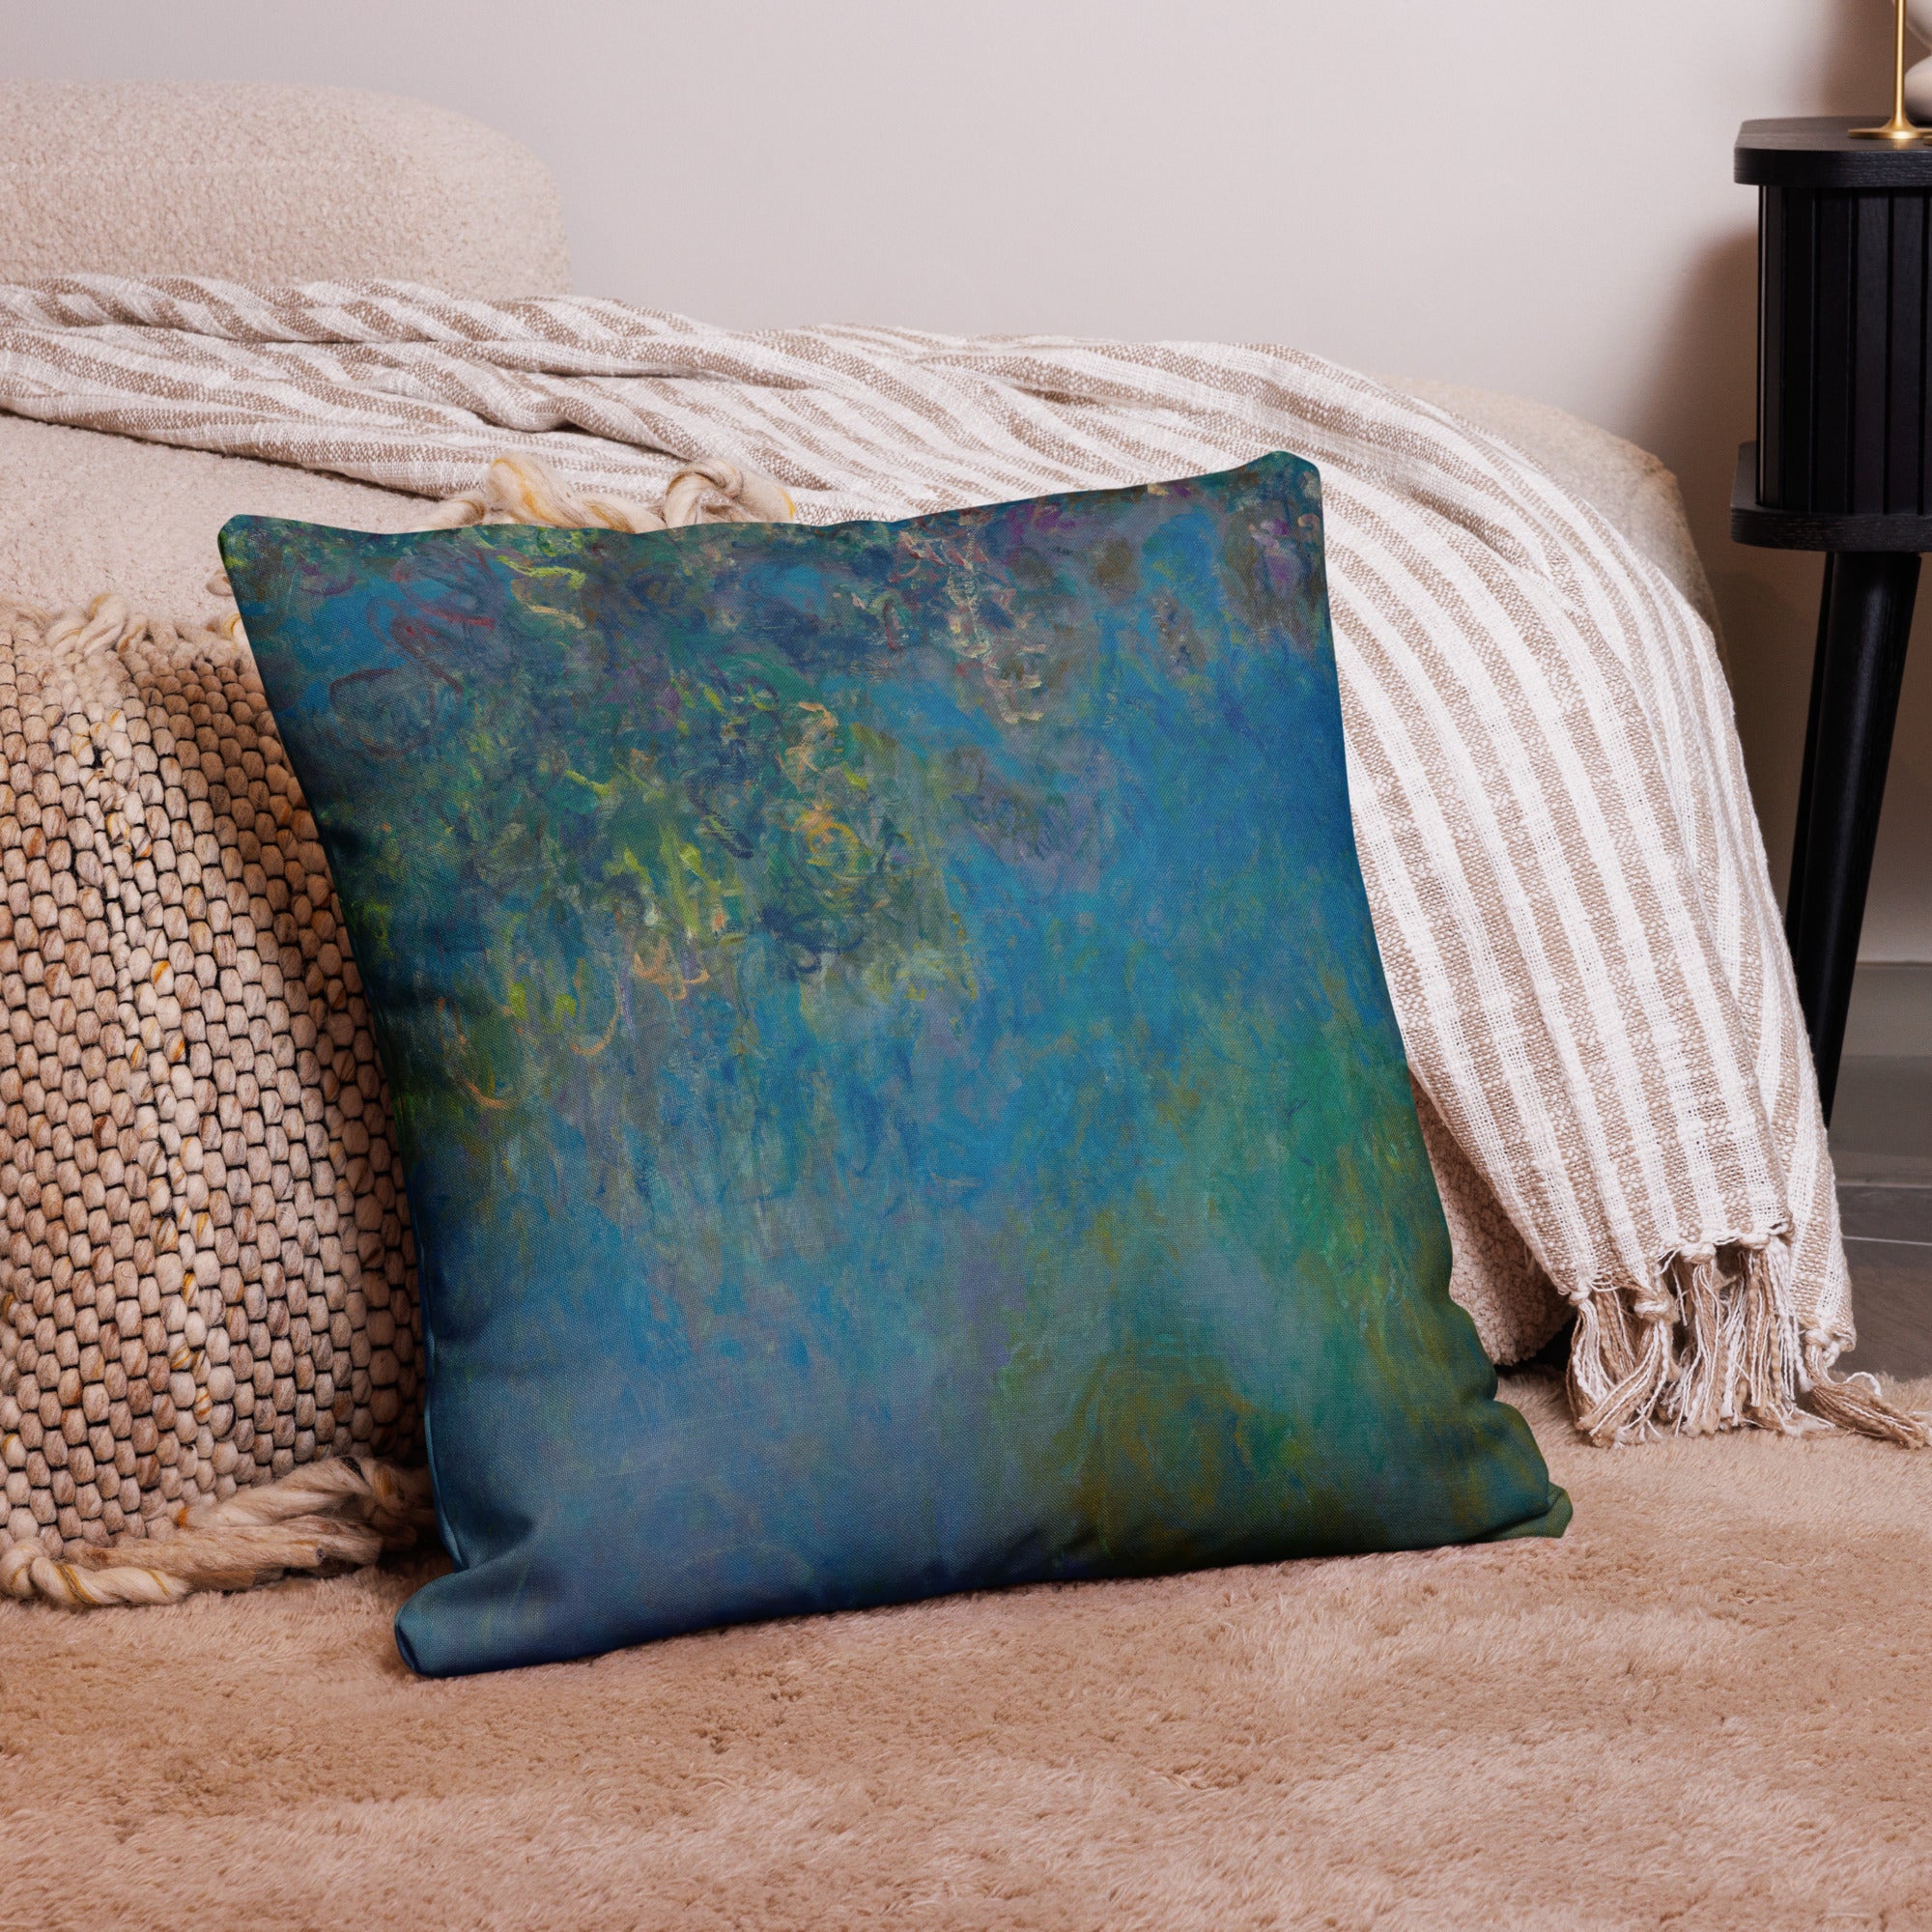 Claude Monet 'Wisteria' Famous Painting Premium Pillow | Premium Art Cushion